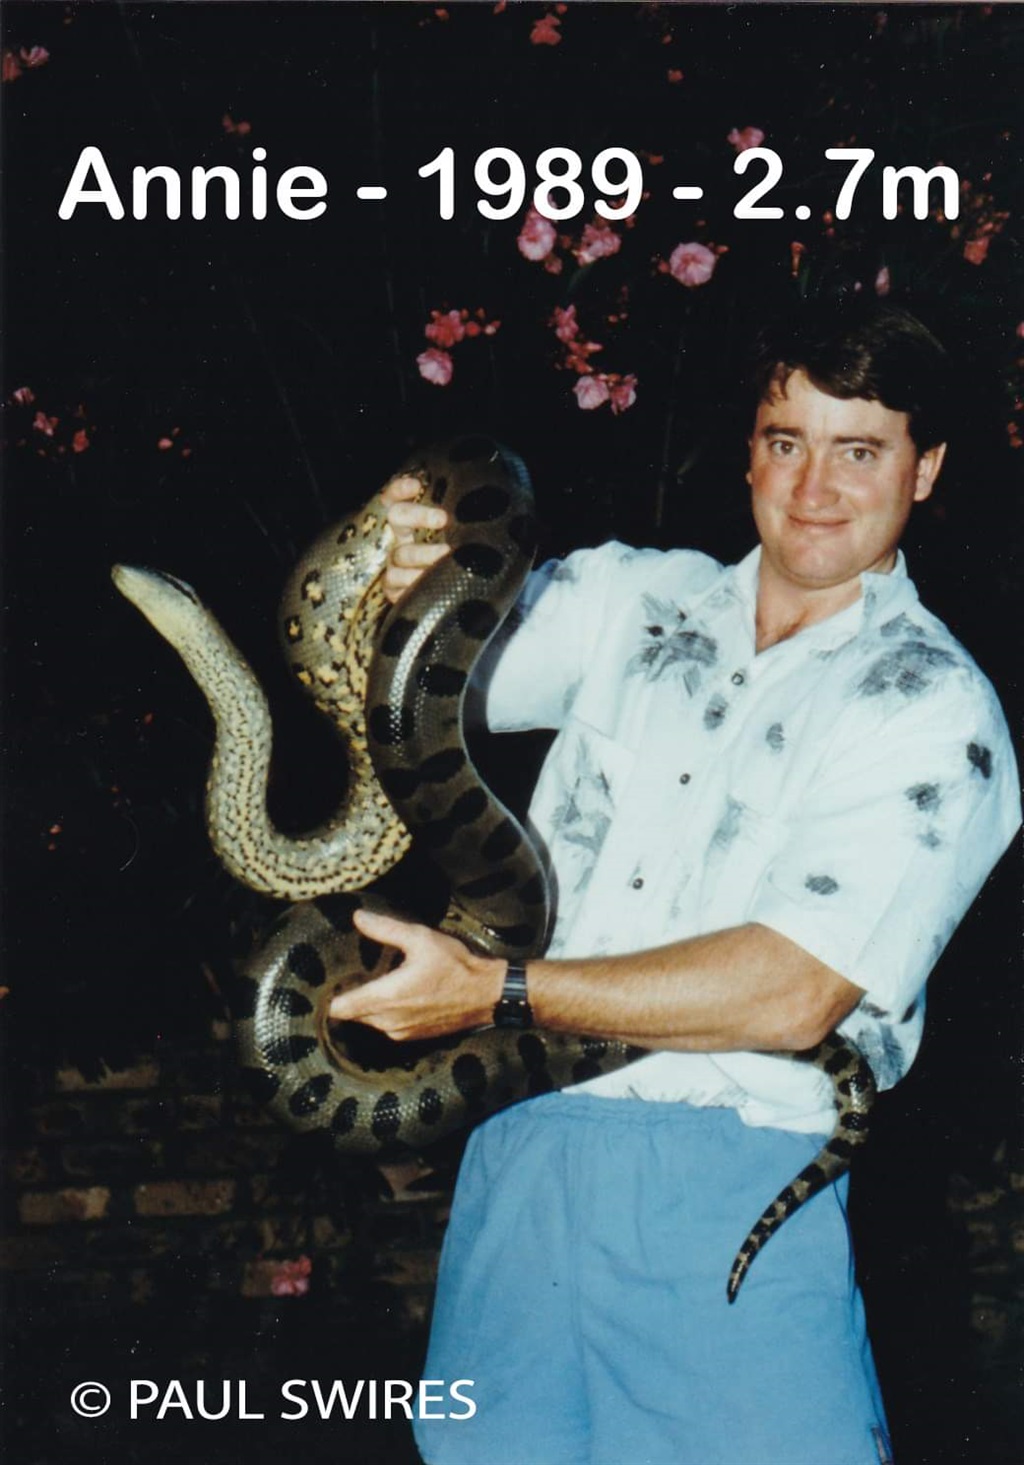 Annie the anaconda pictured in 1989